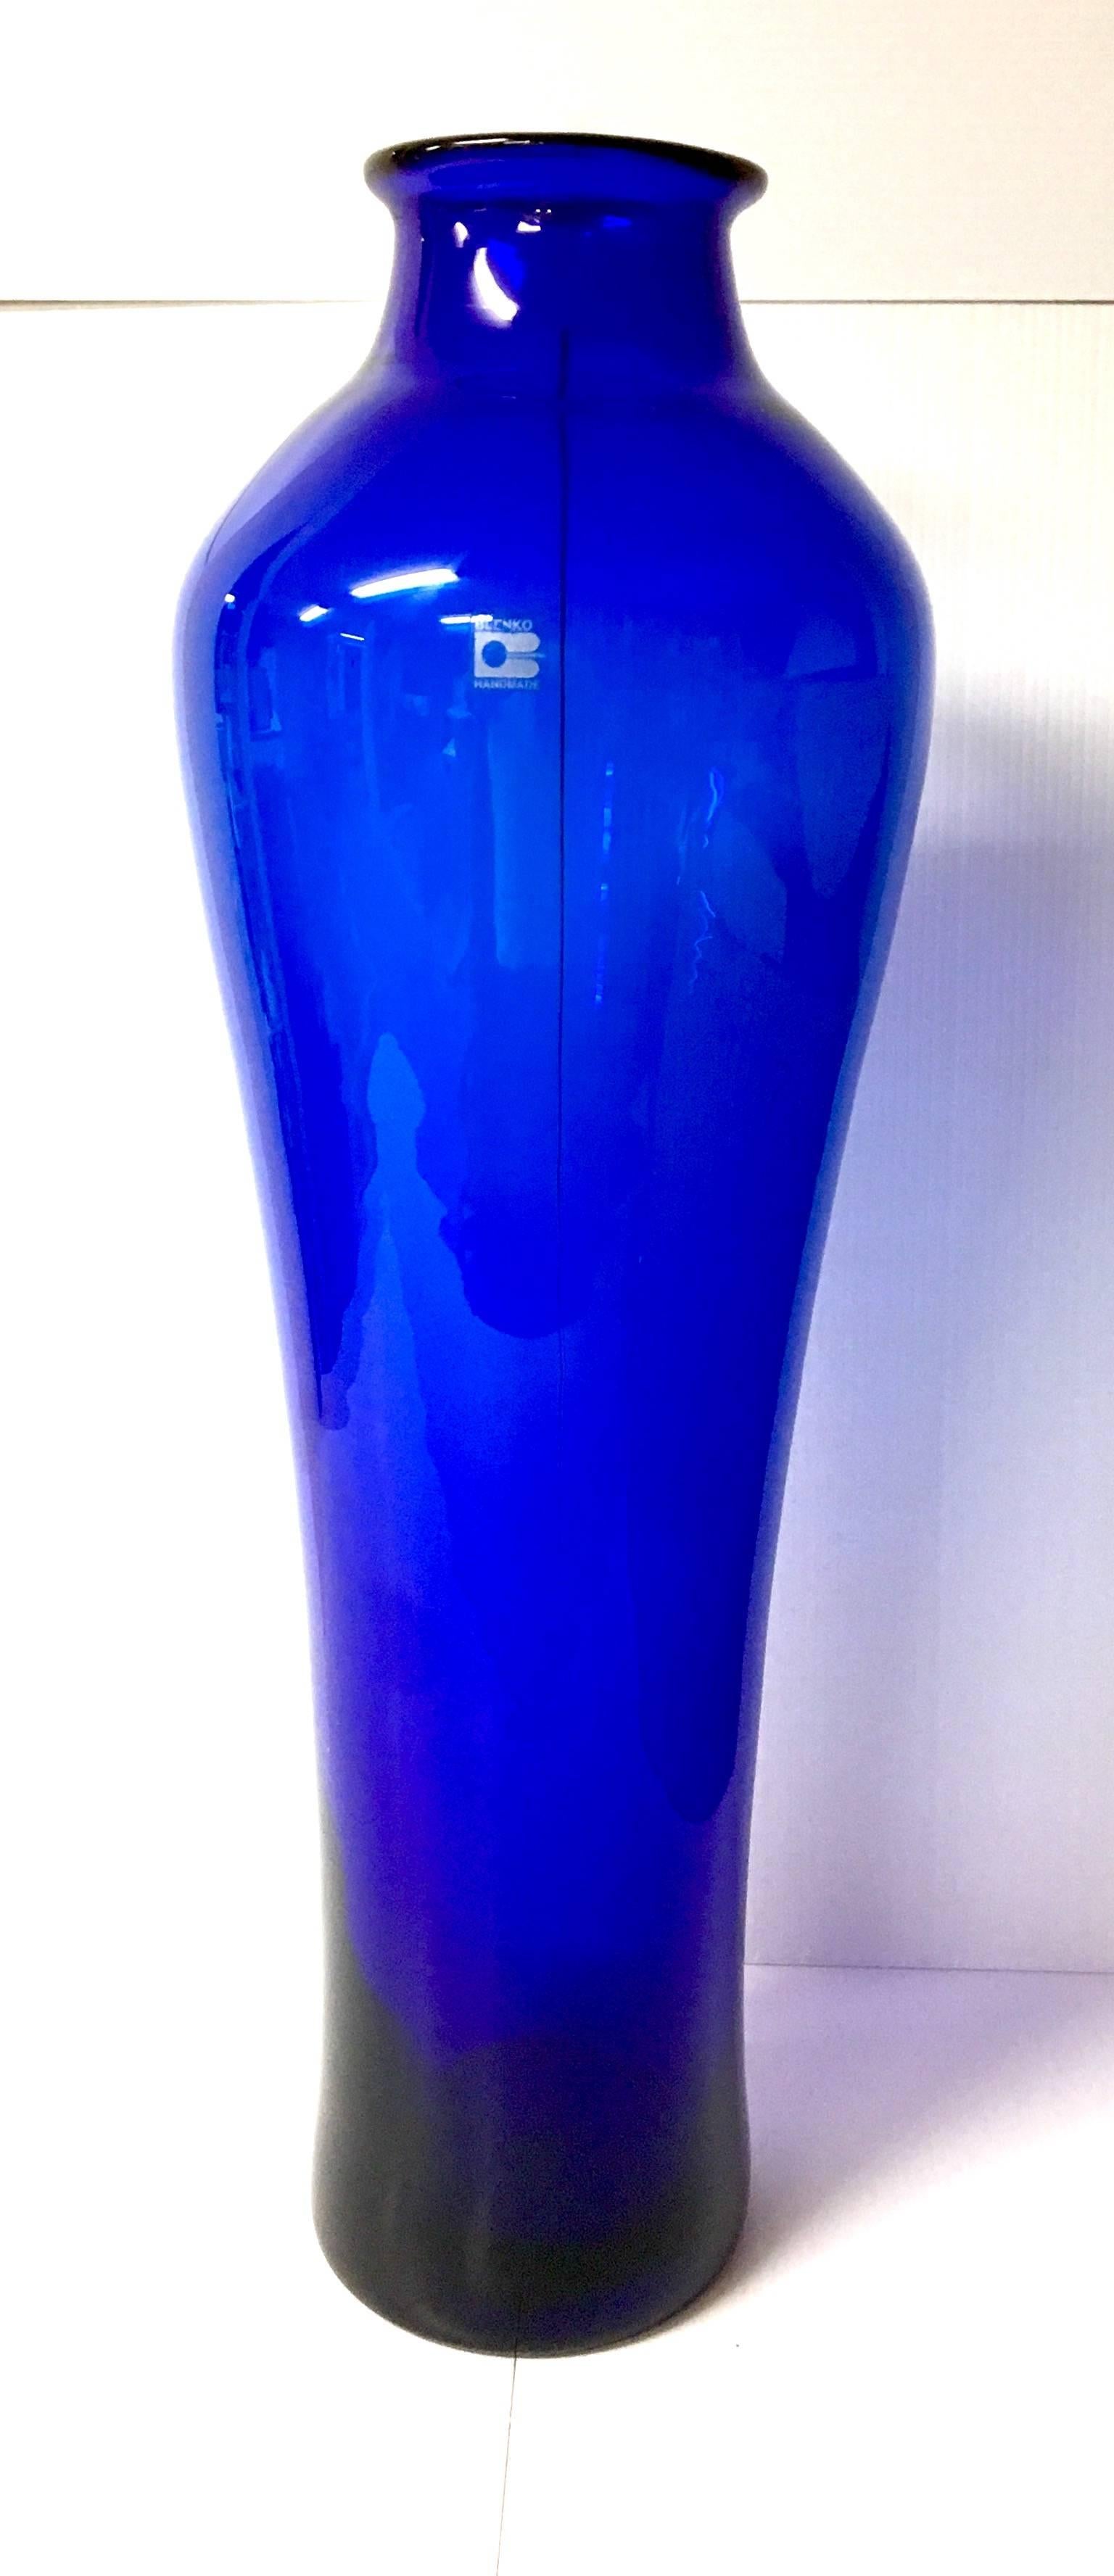 Striking Chinese vase designed by Don Shepherd for Blenko Glass in dazzling blue cobalt glass. Retains its original Blenko label.